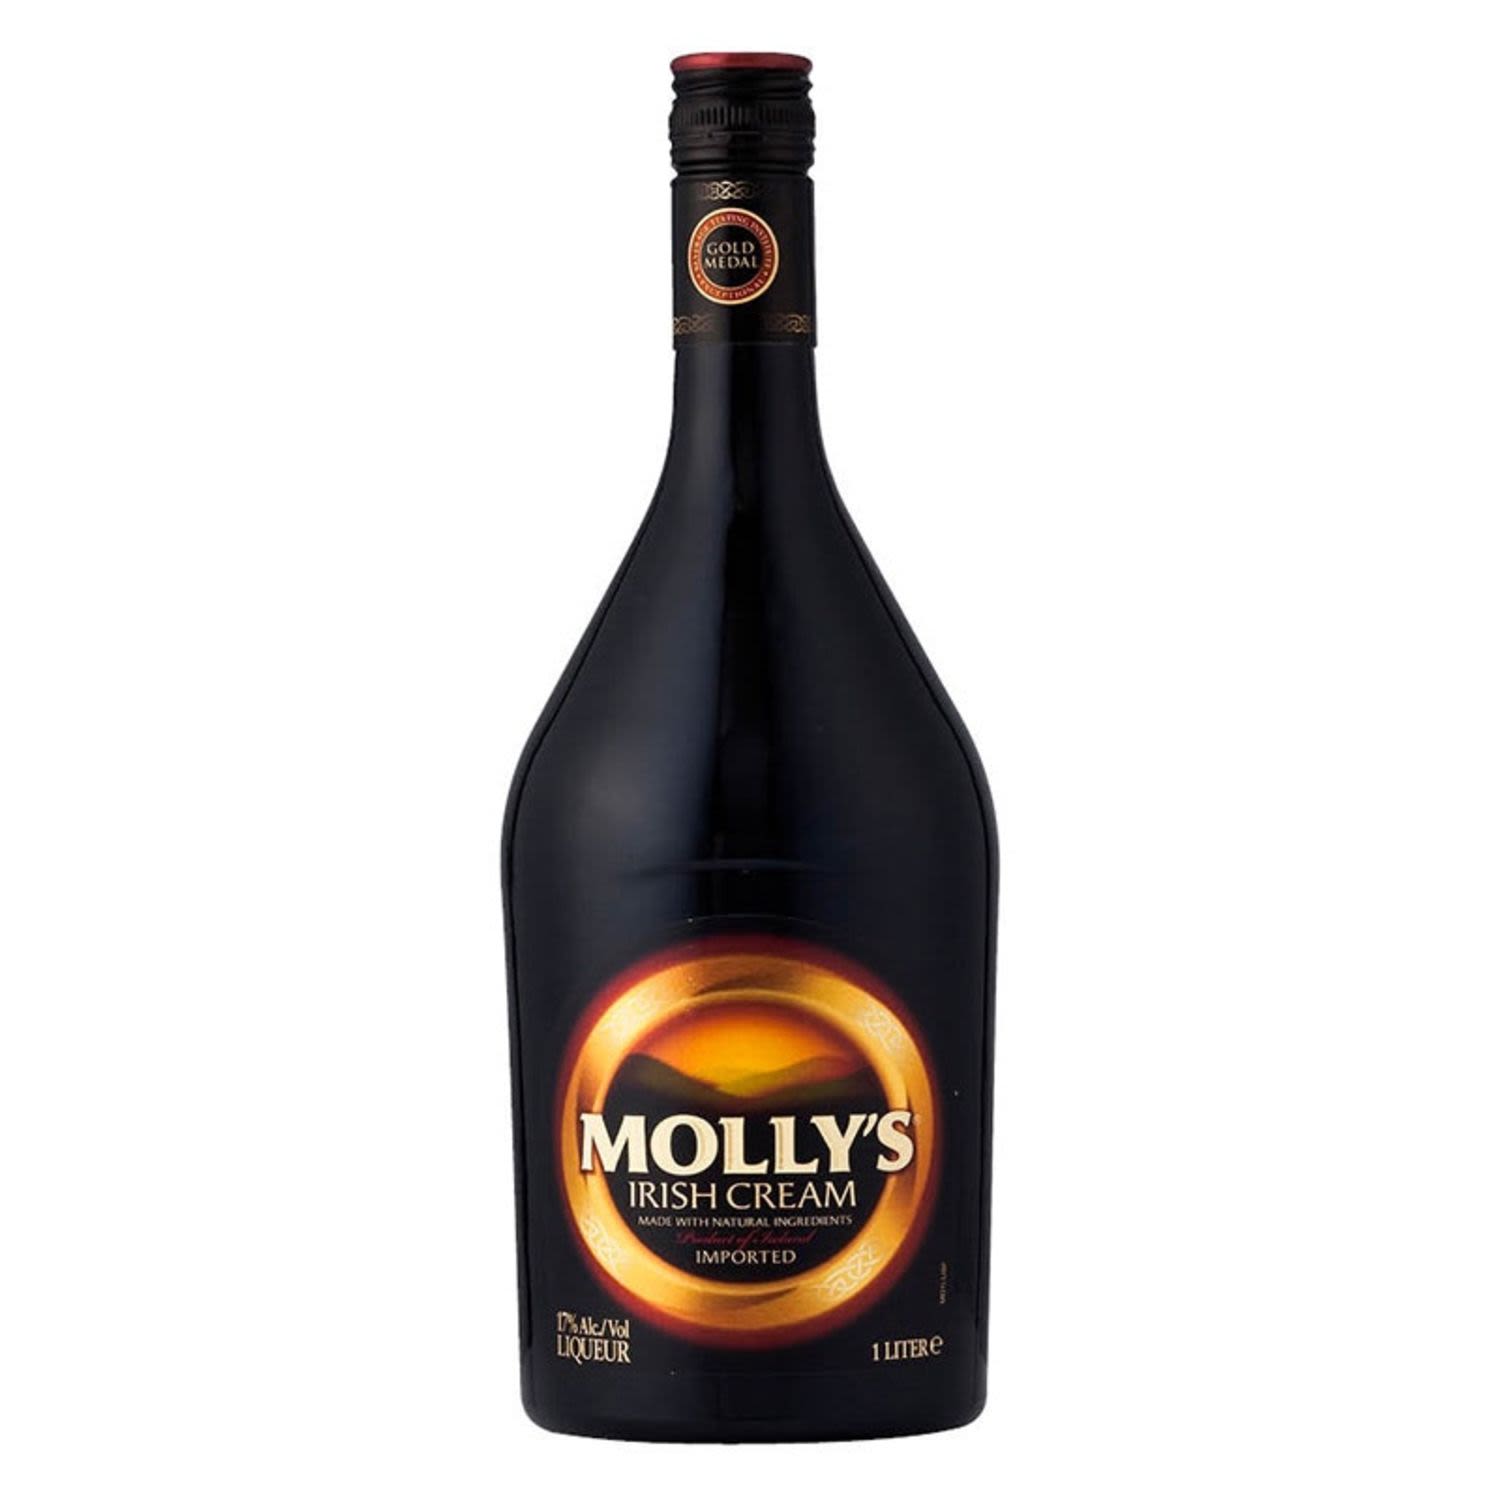 Molly’s Irish Cream Liqueur is a premium blend of fresh Irish dairy cream, aged Irish Whiskey, fine Irish Spirits and natural chocolate flavours.<br /> <br />Alcohol Volume: 17.00%<br /><br />Pack Format: Bottle<br /><br />Standard Drinks: 13</br /><br />Pack Type: Bottle<br /><br />Country of Origin: Ireland<br />